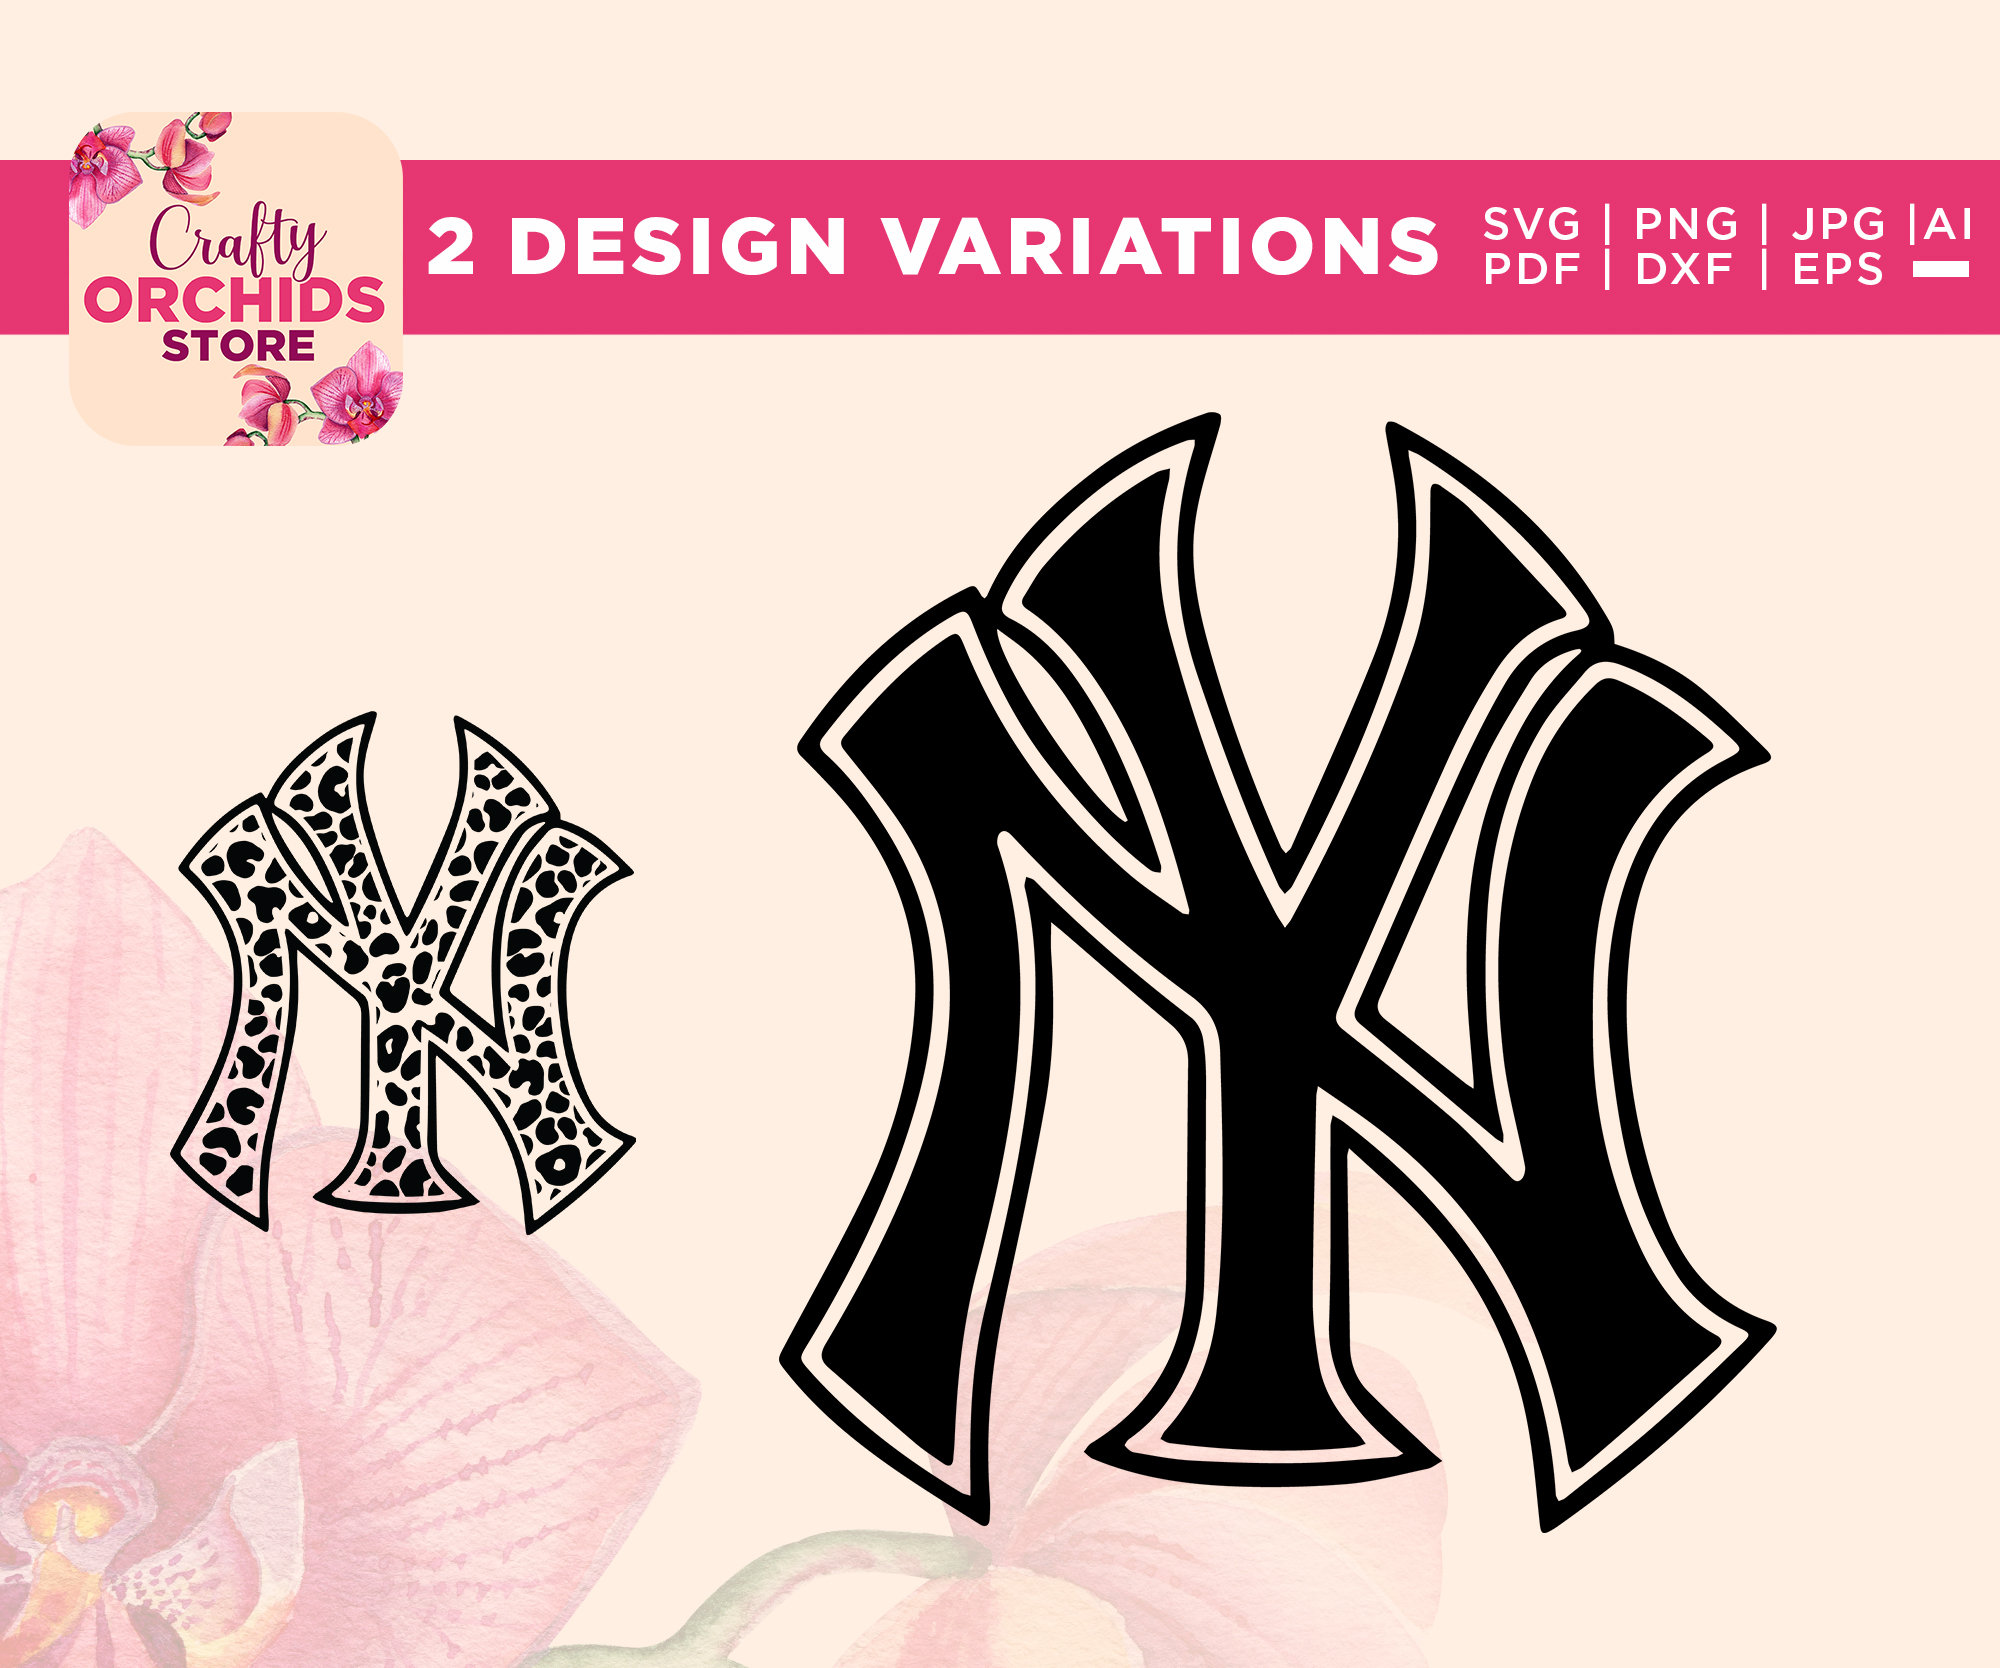 Yankees Baseball Svg, Go Yankees Svg, Retro Sports Jersey Font, Yankees  Team Logo. Vector Cut file Cricut, Silhouette, Pdf Png Dxf Eps.